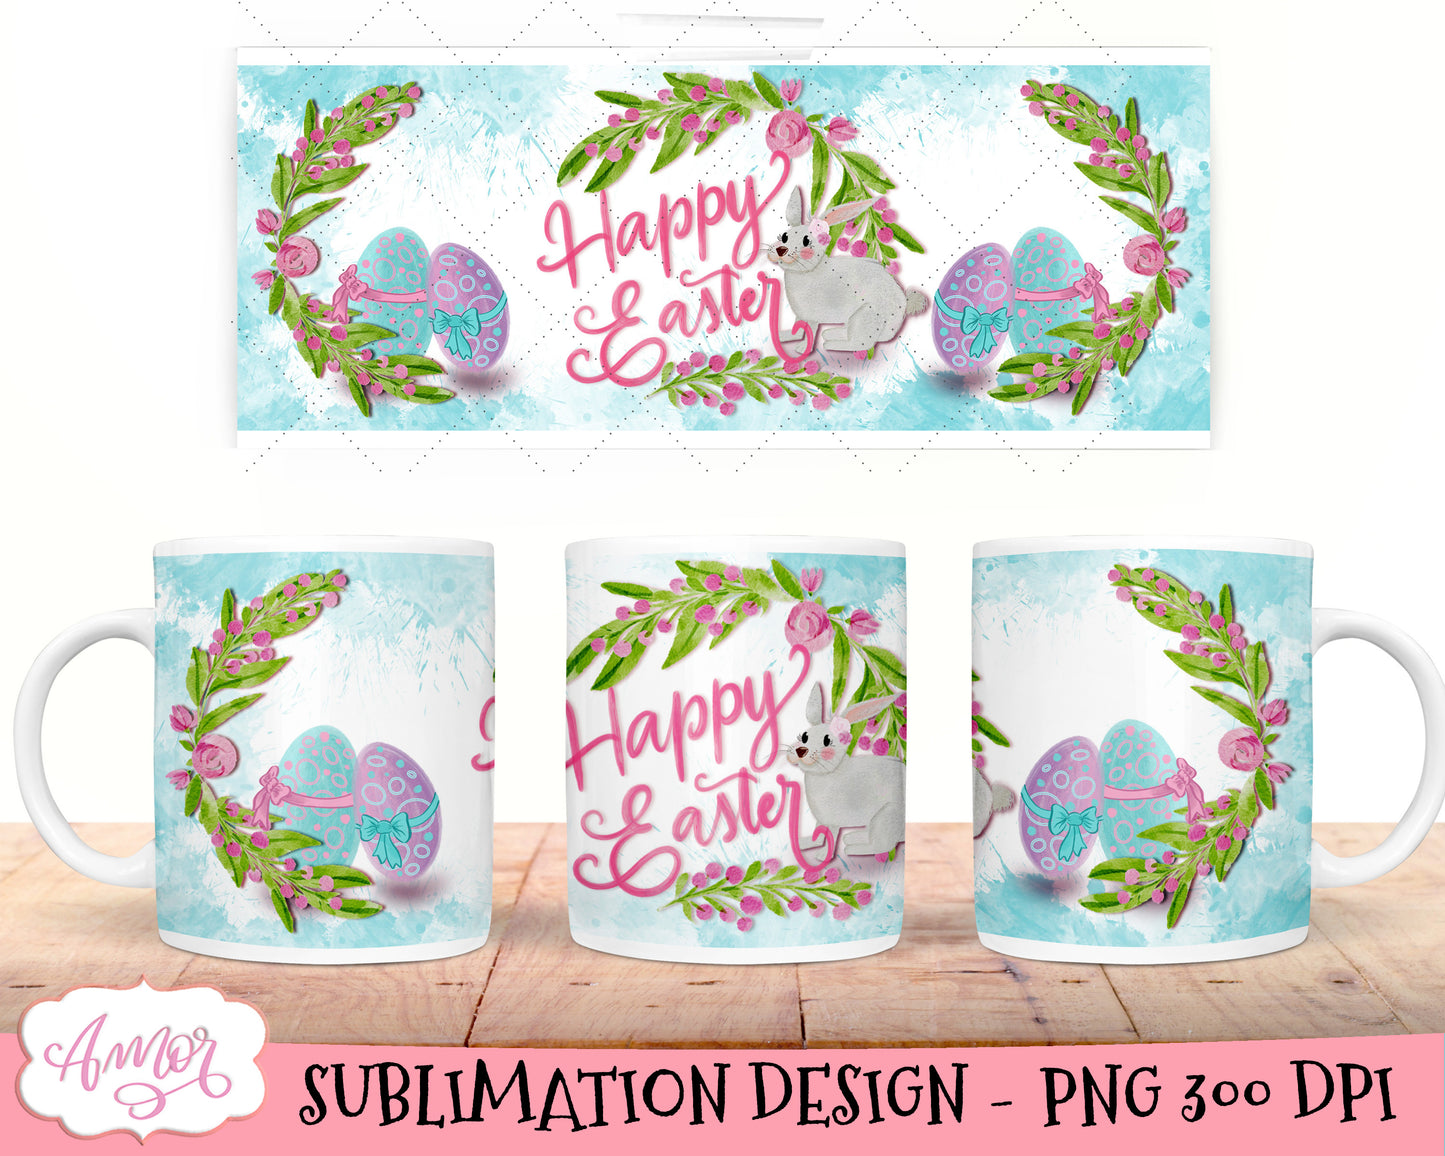 Happy Easter mug wrap for sublimation